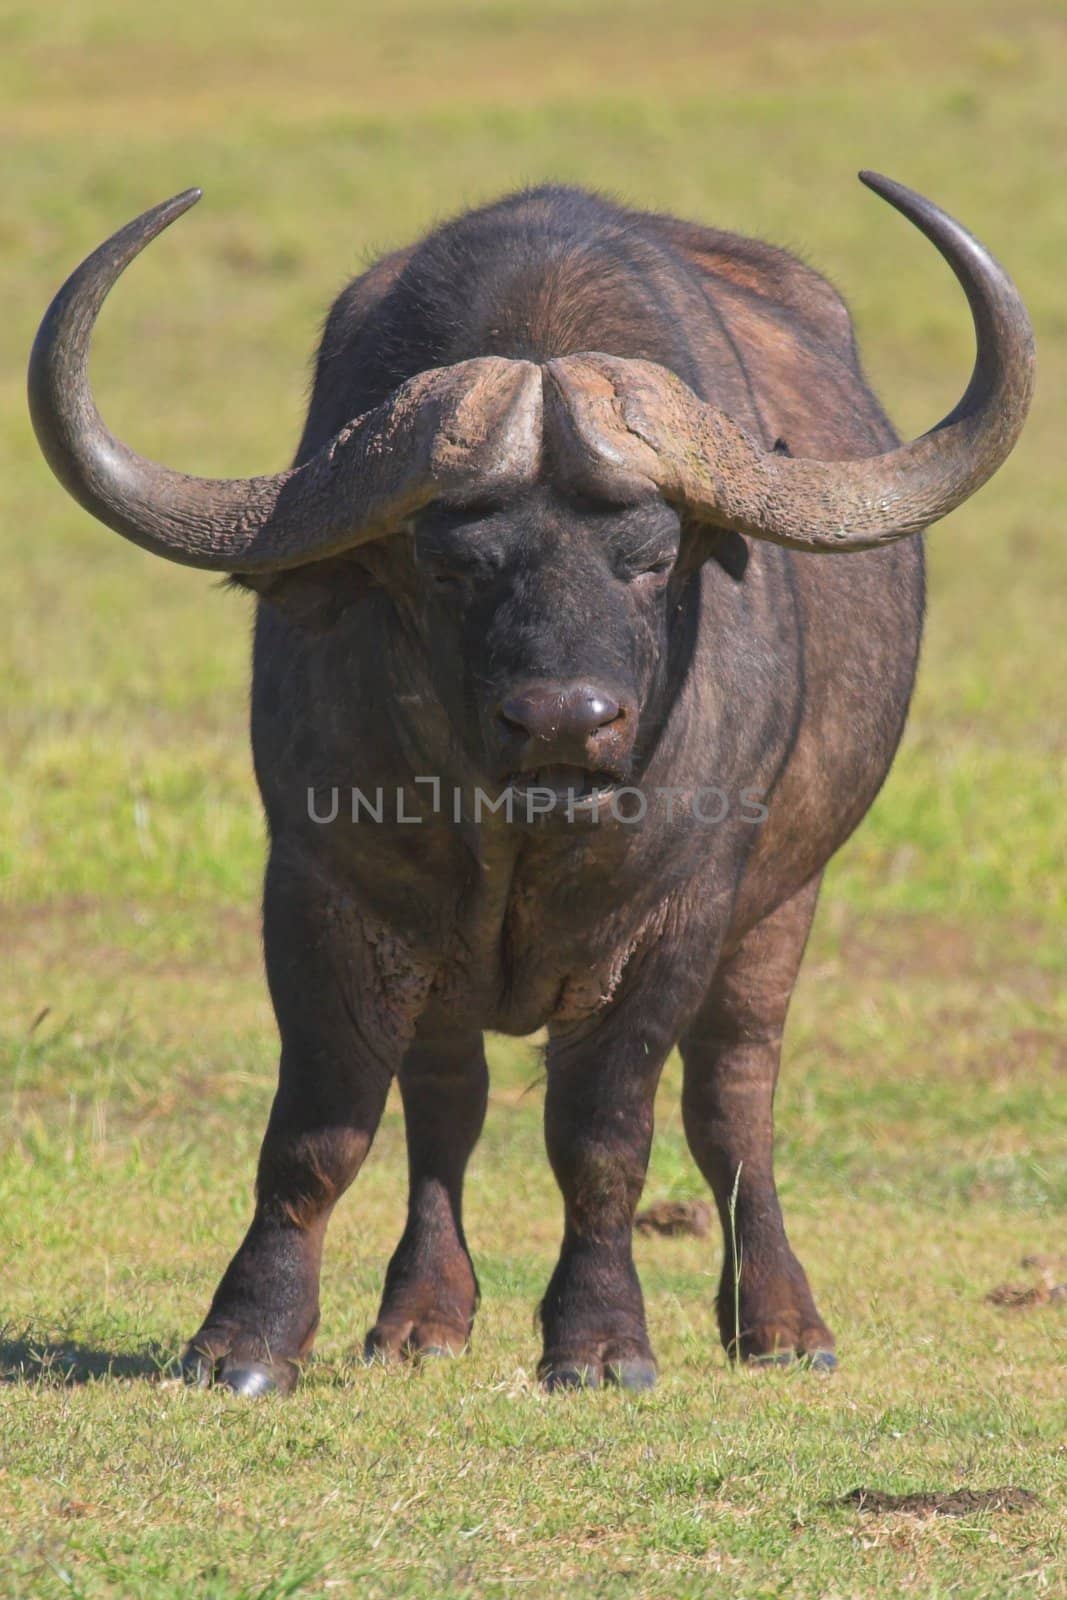 Cape Buffalo by nightowlza